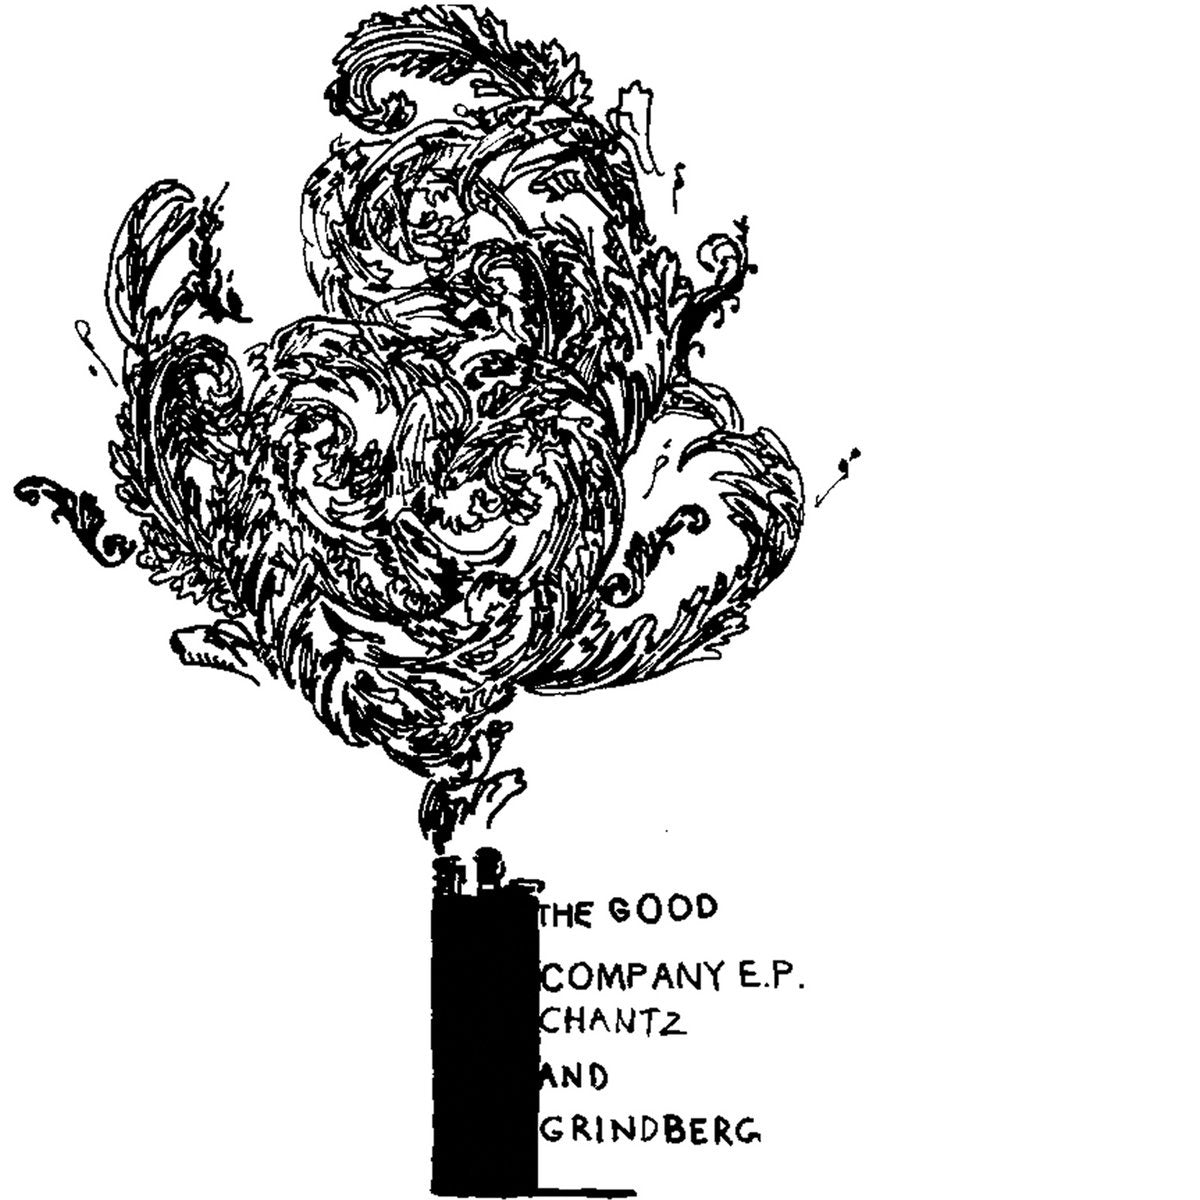 Chantz Erolin + Cory Grindberg  -  The Good Company E.P. - New CD Album 2009 Tru Roots Speakeasy USA - Minneapolis Hip Hop